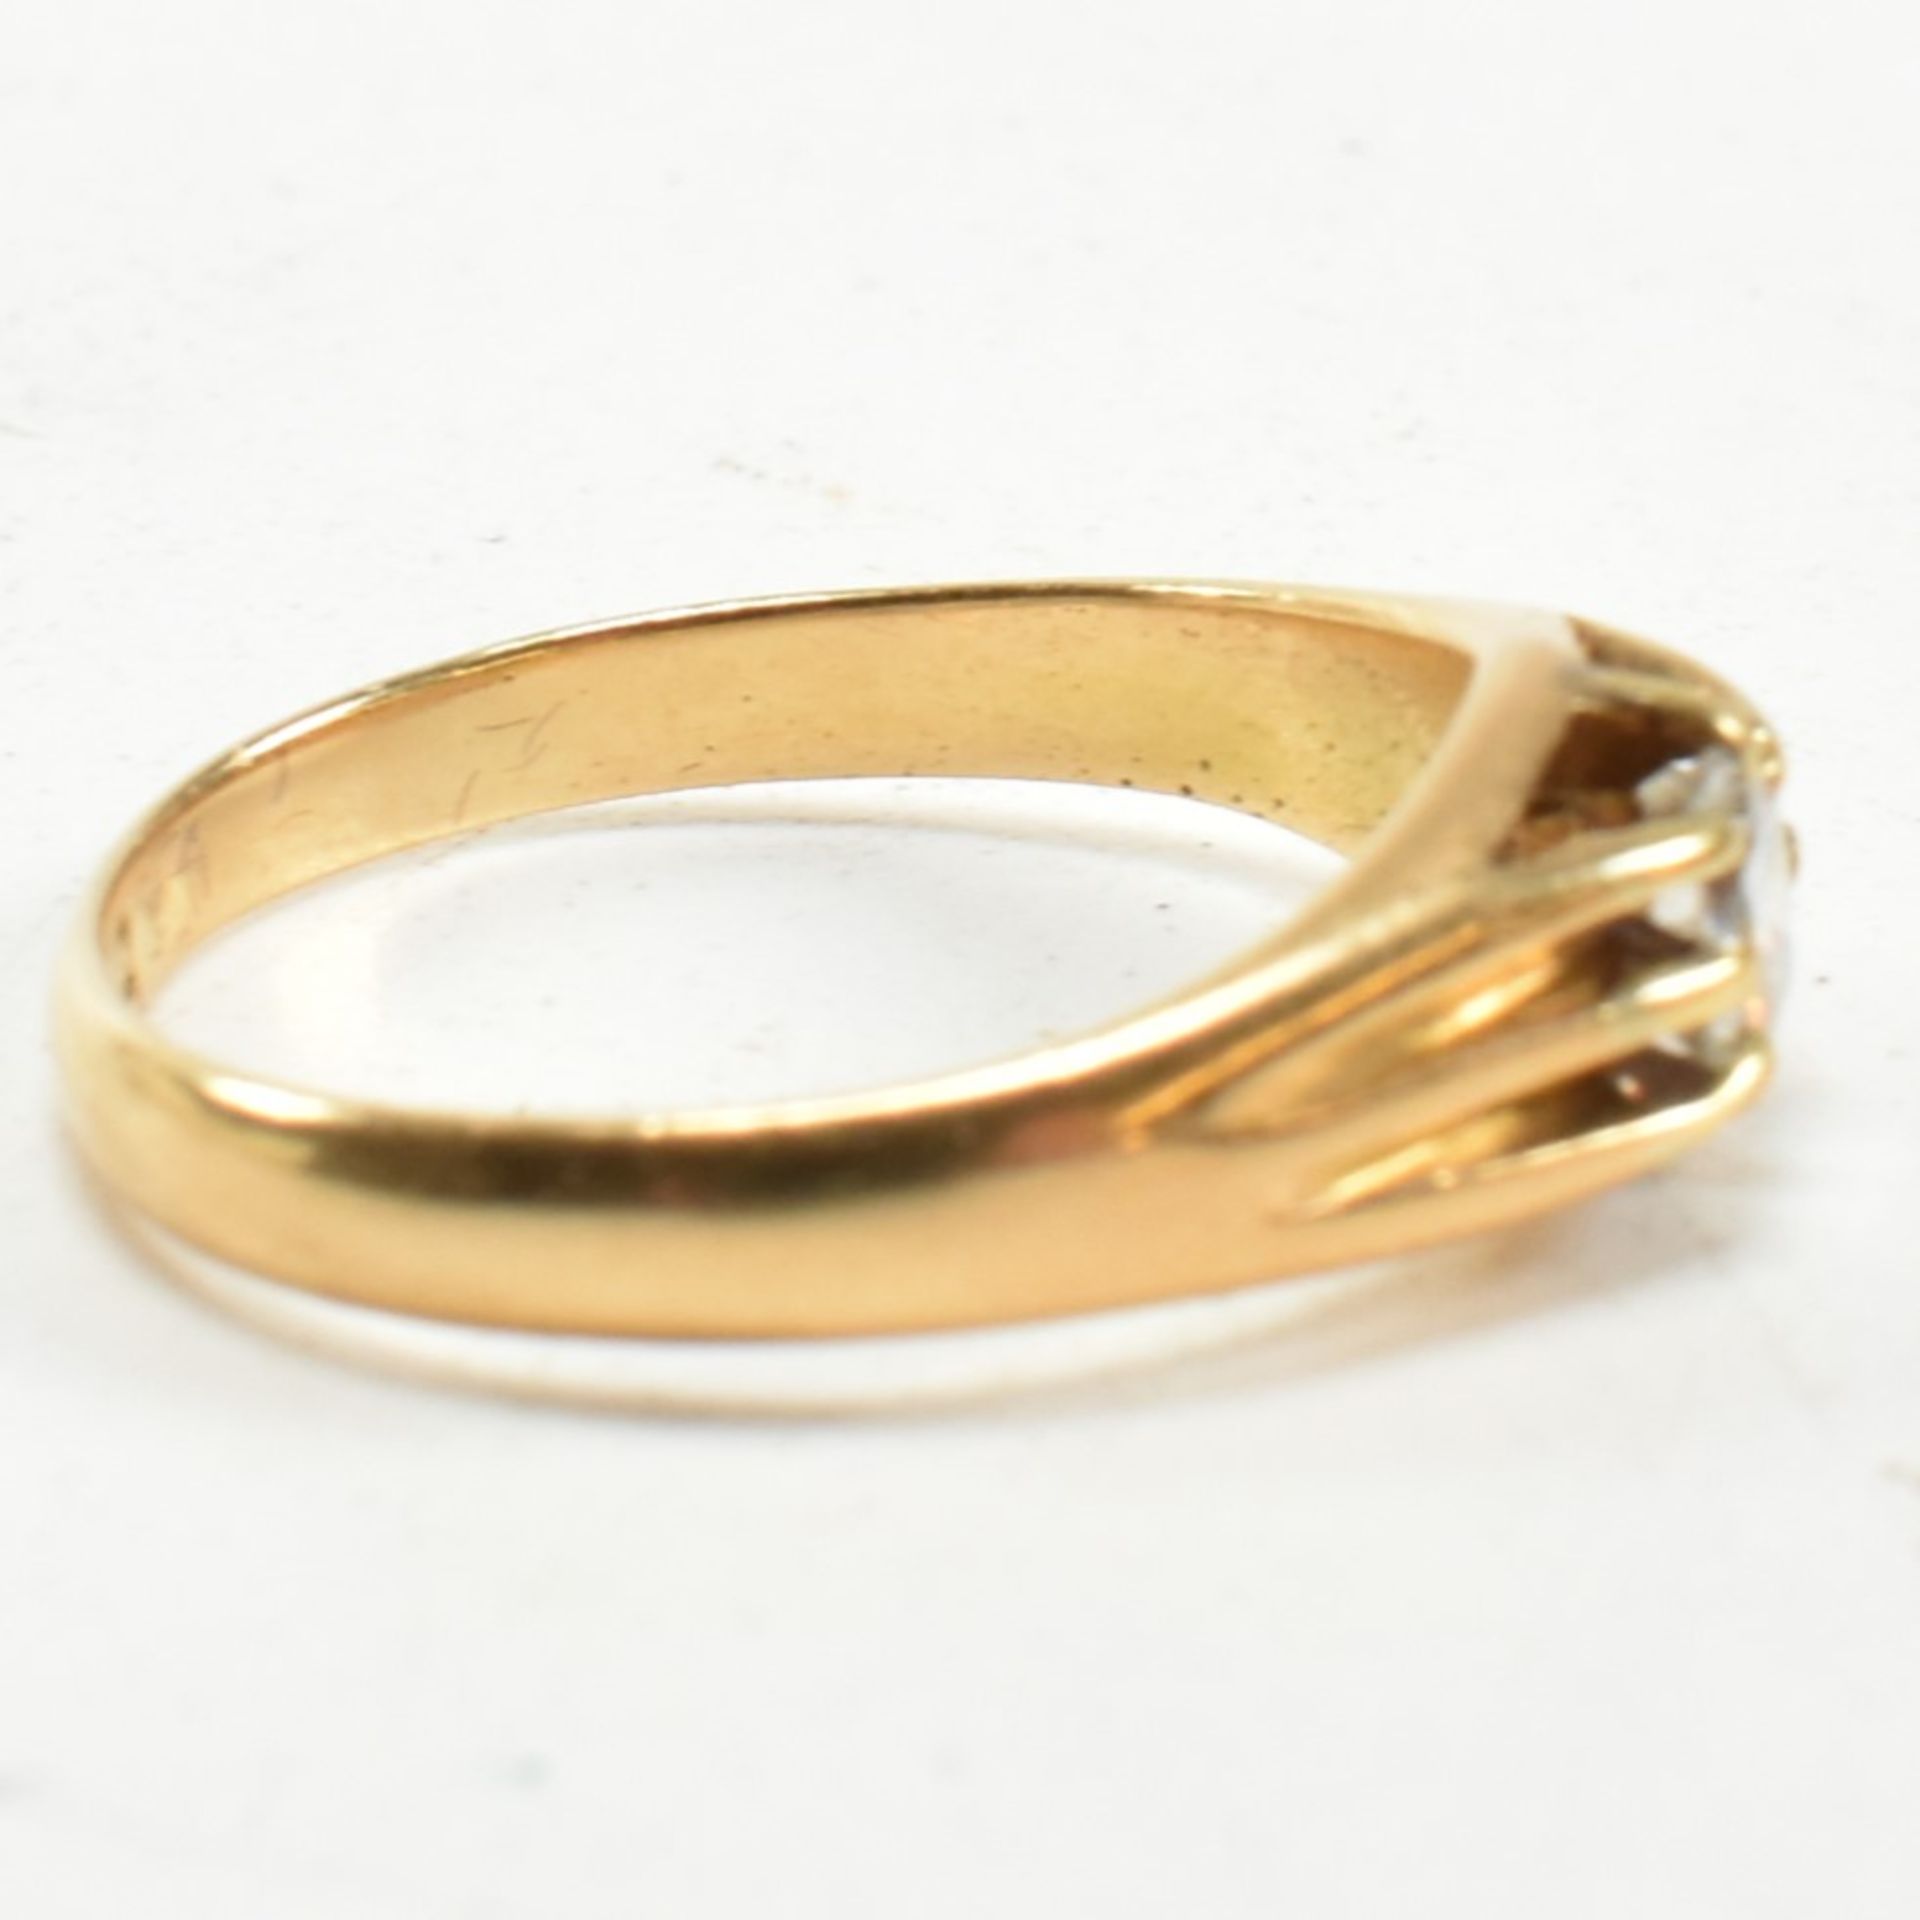 HALLMARKED 18CT GOLD & DIAMOND RING - Image 6 of 8